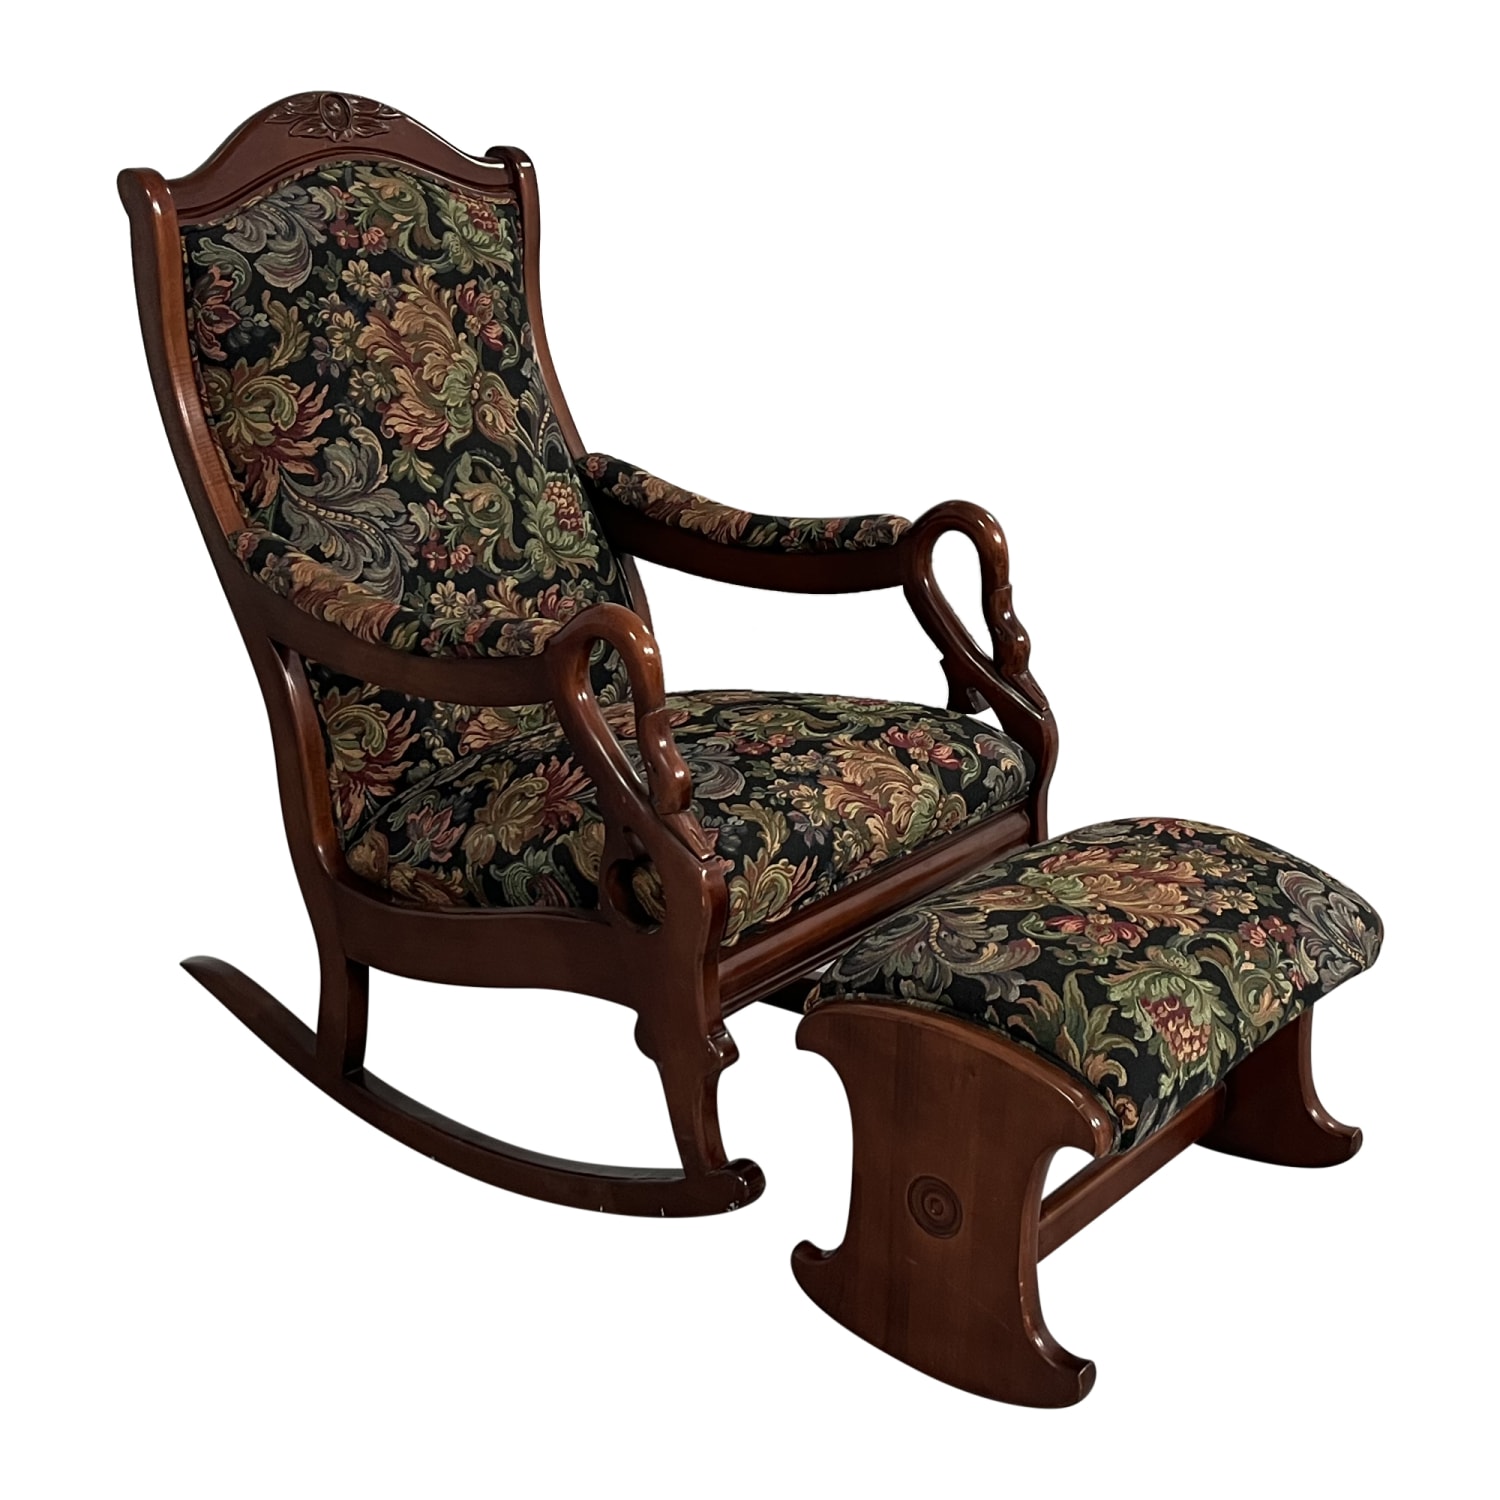 Vintage Rocking Chair and Ottoman | 49% Off | Kaiyo